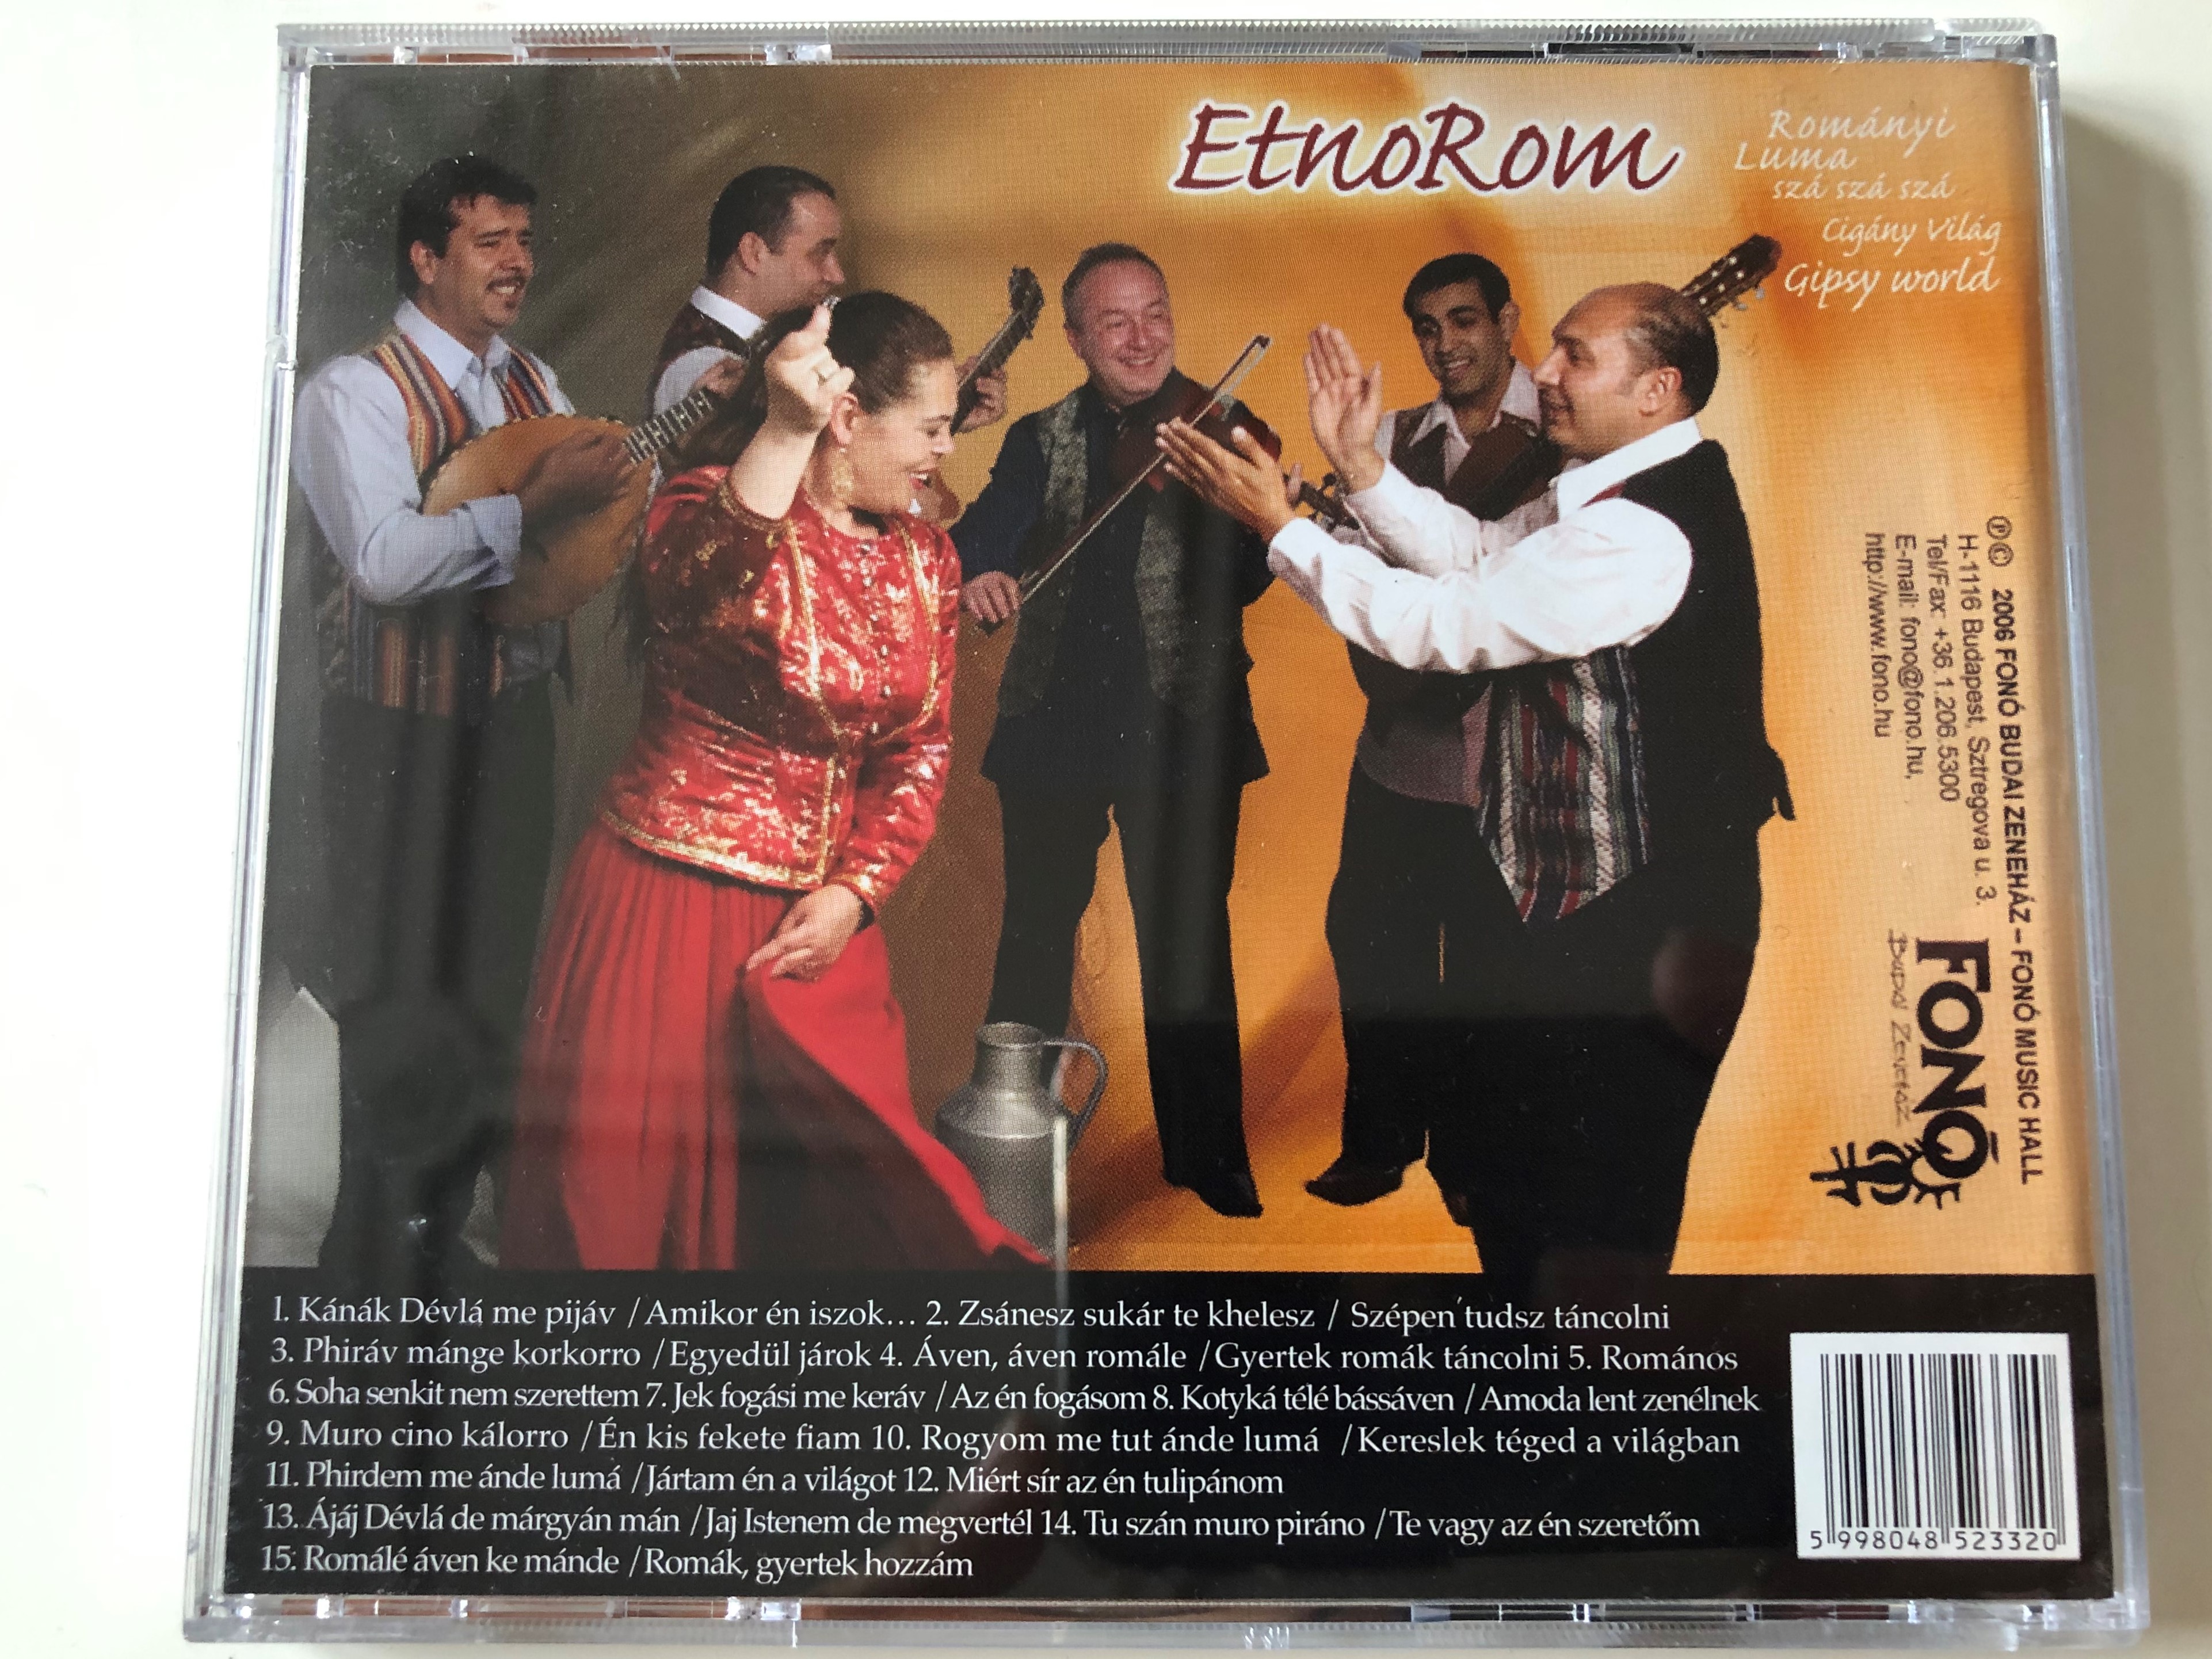 etnorom-rom-nyi-lum-sza-sza-sza-cig-ny-vil-g-gipsy-world-fon-records-audio-cd-2006-5998048523320-8-.jpg